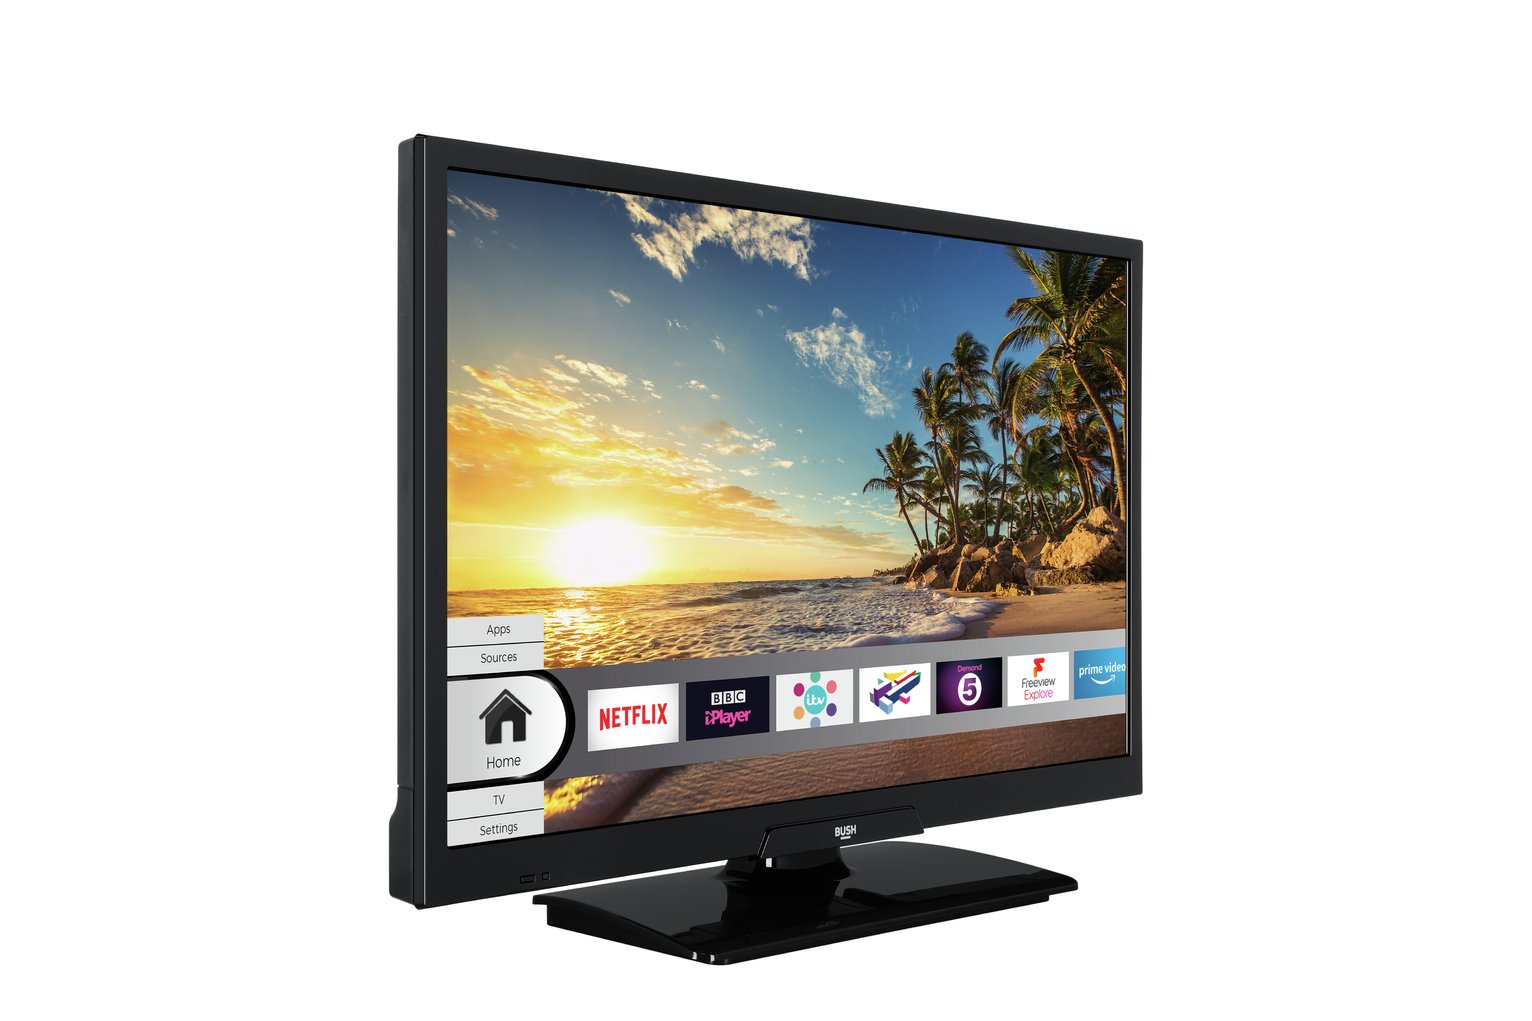 Bush 22 Inch Smart Full HD LED TV Review